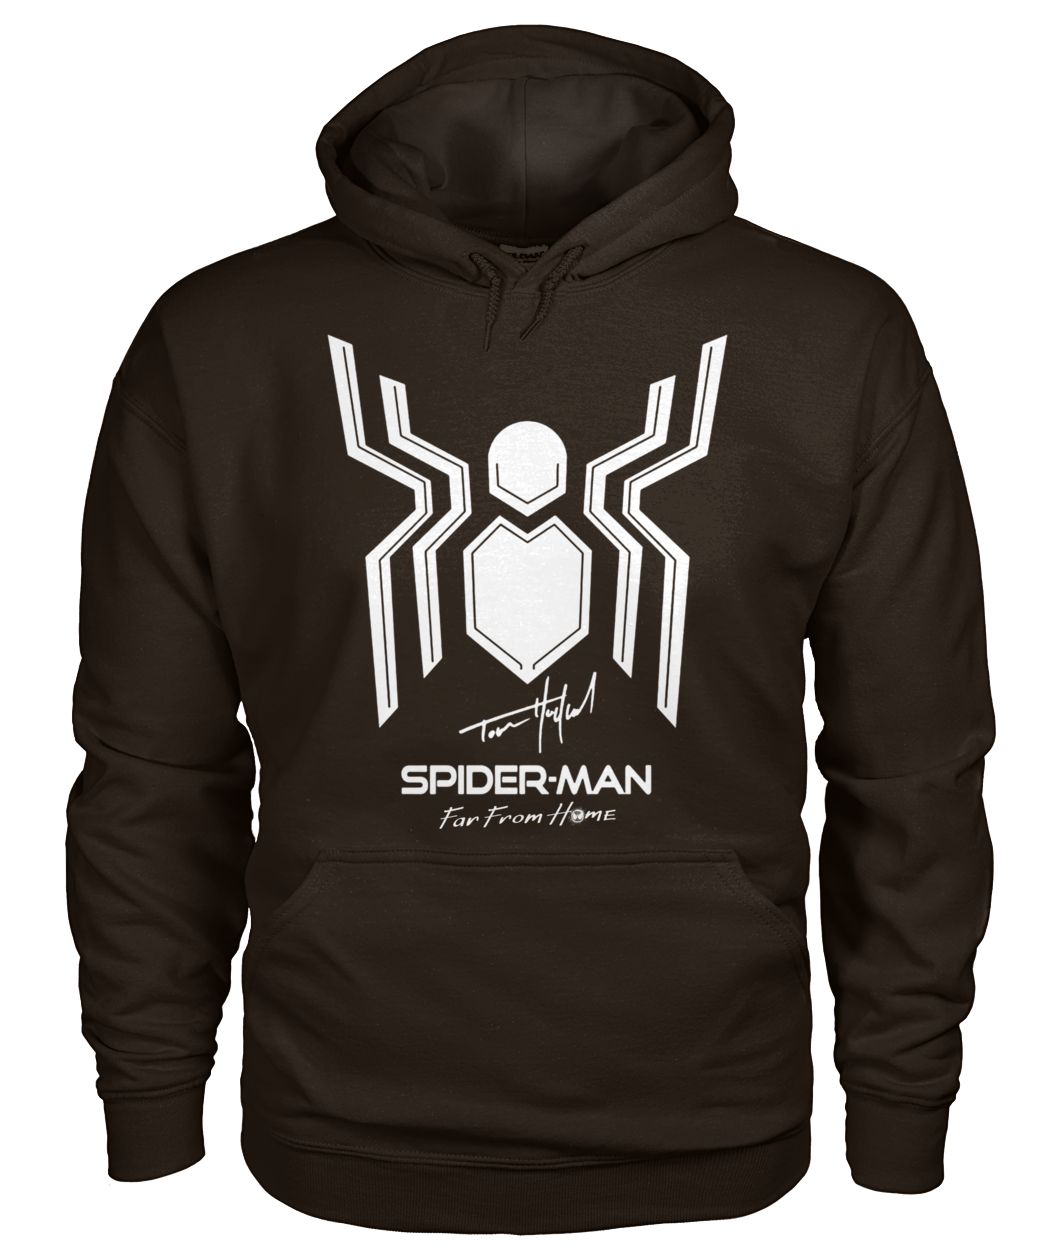 Spider-man far from home gildan hoodie